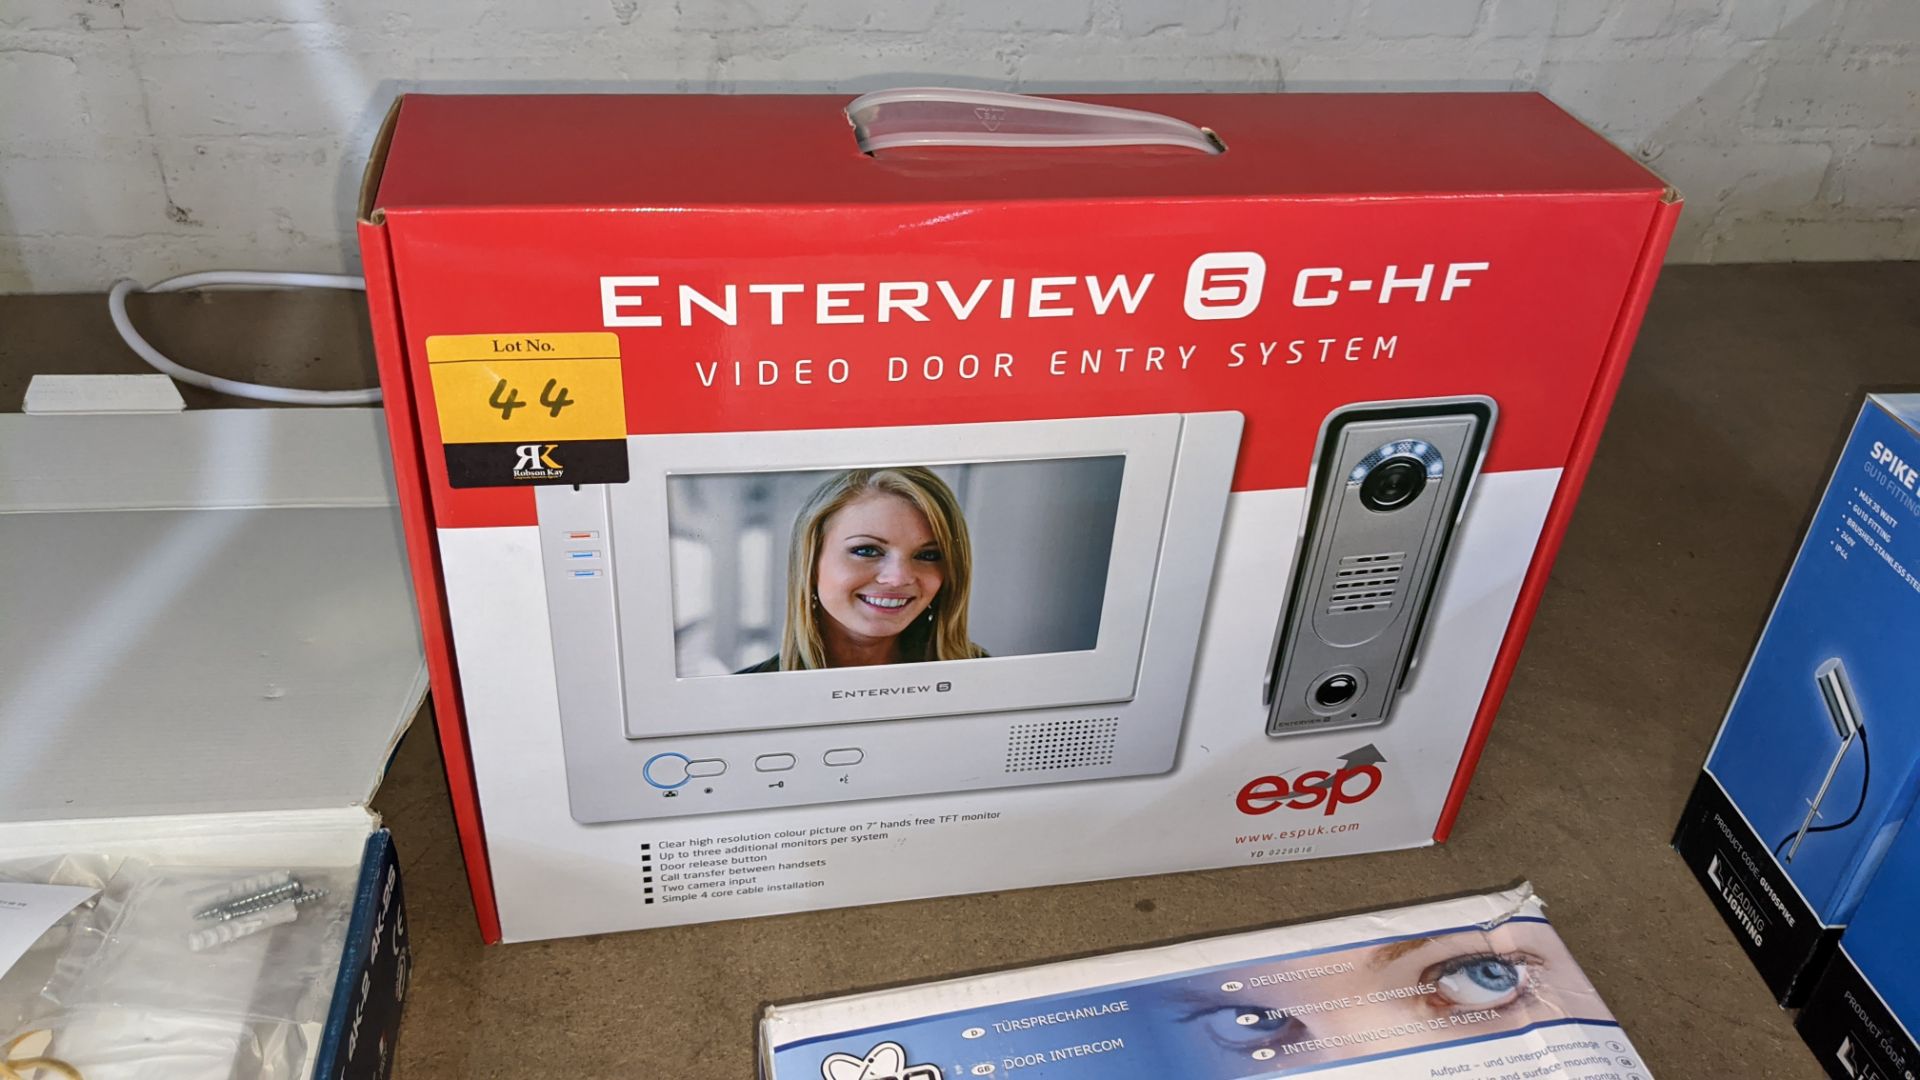 Enterview 5 C-HF video door entry system